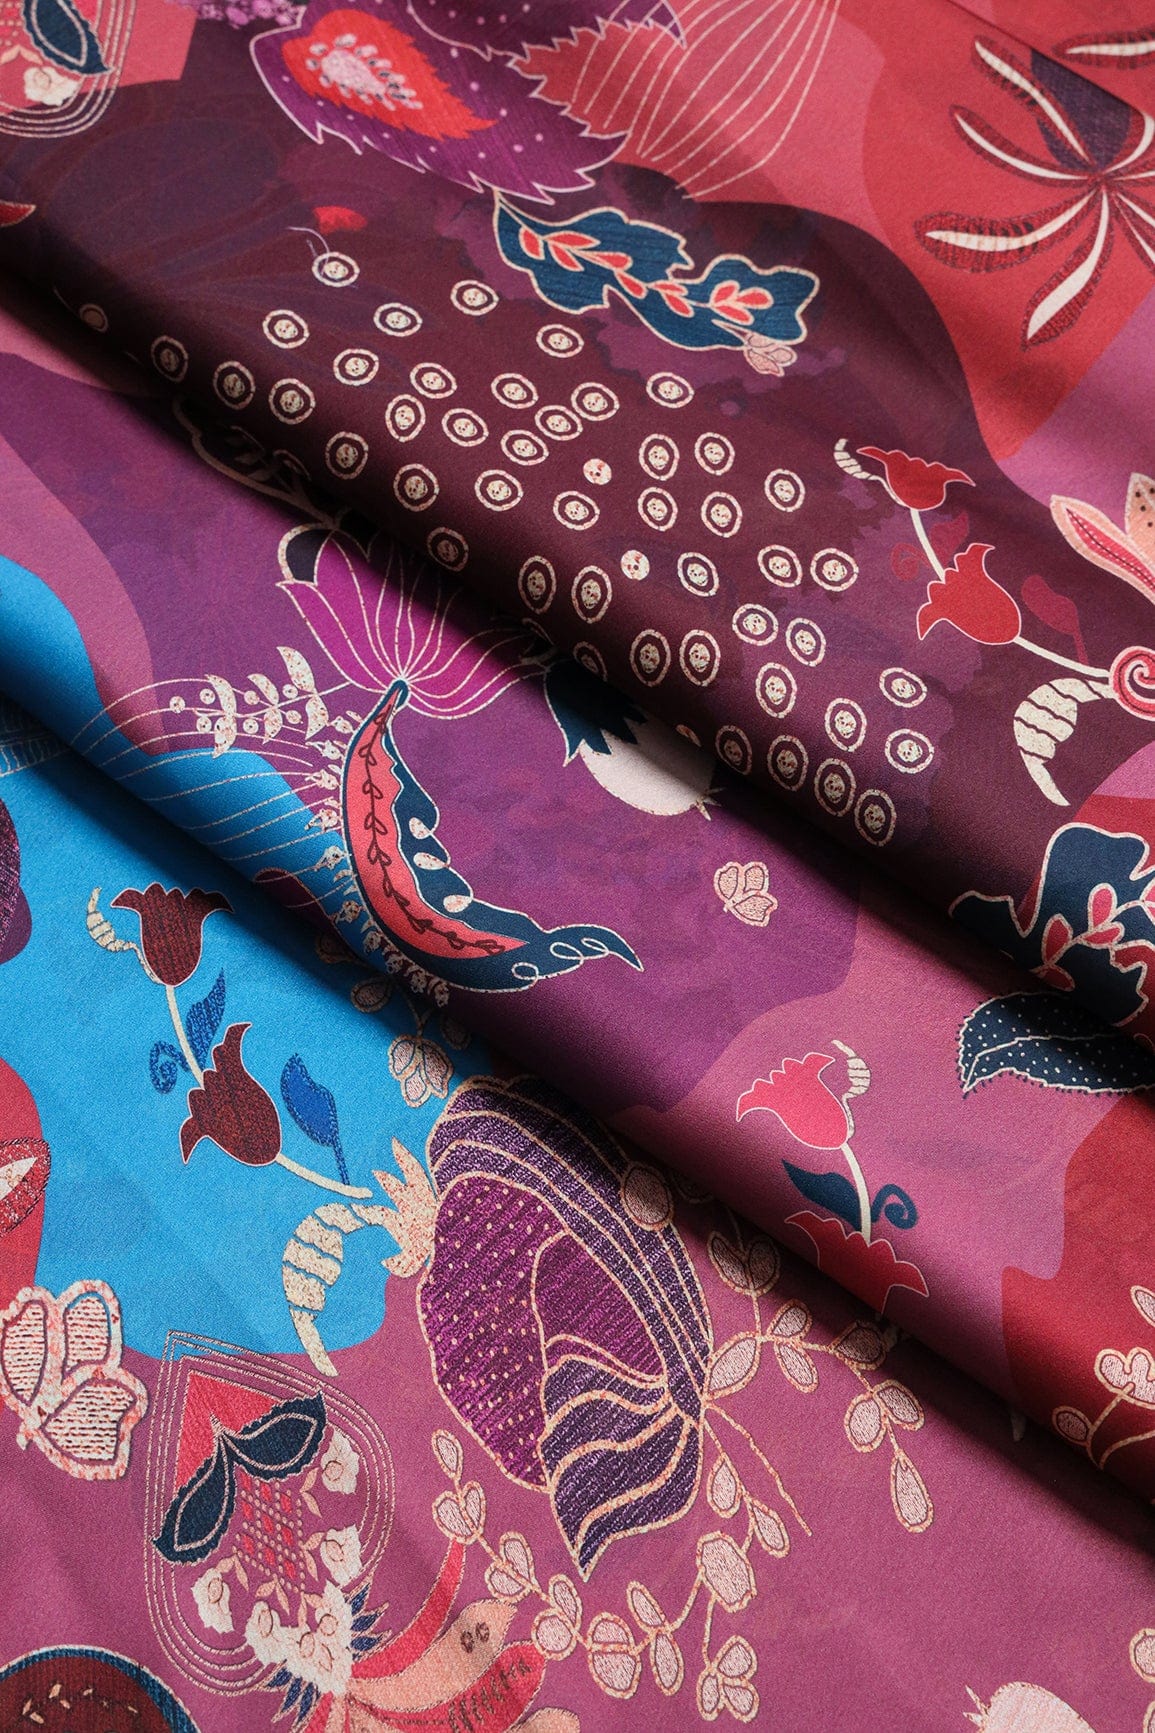 doeraa Prints Multi Color Floral Pattern Digital Print On Multi Color Georgette Satin Fabric